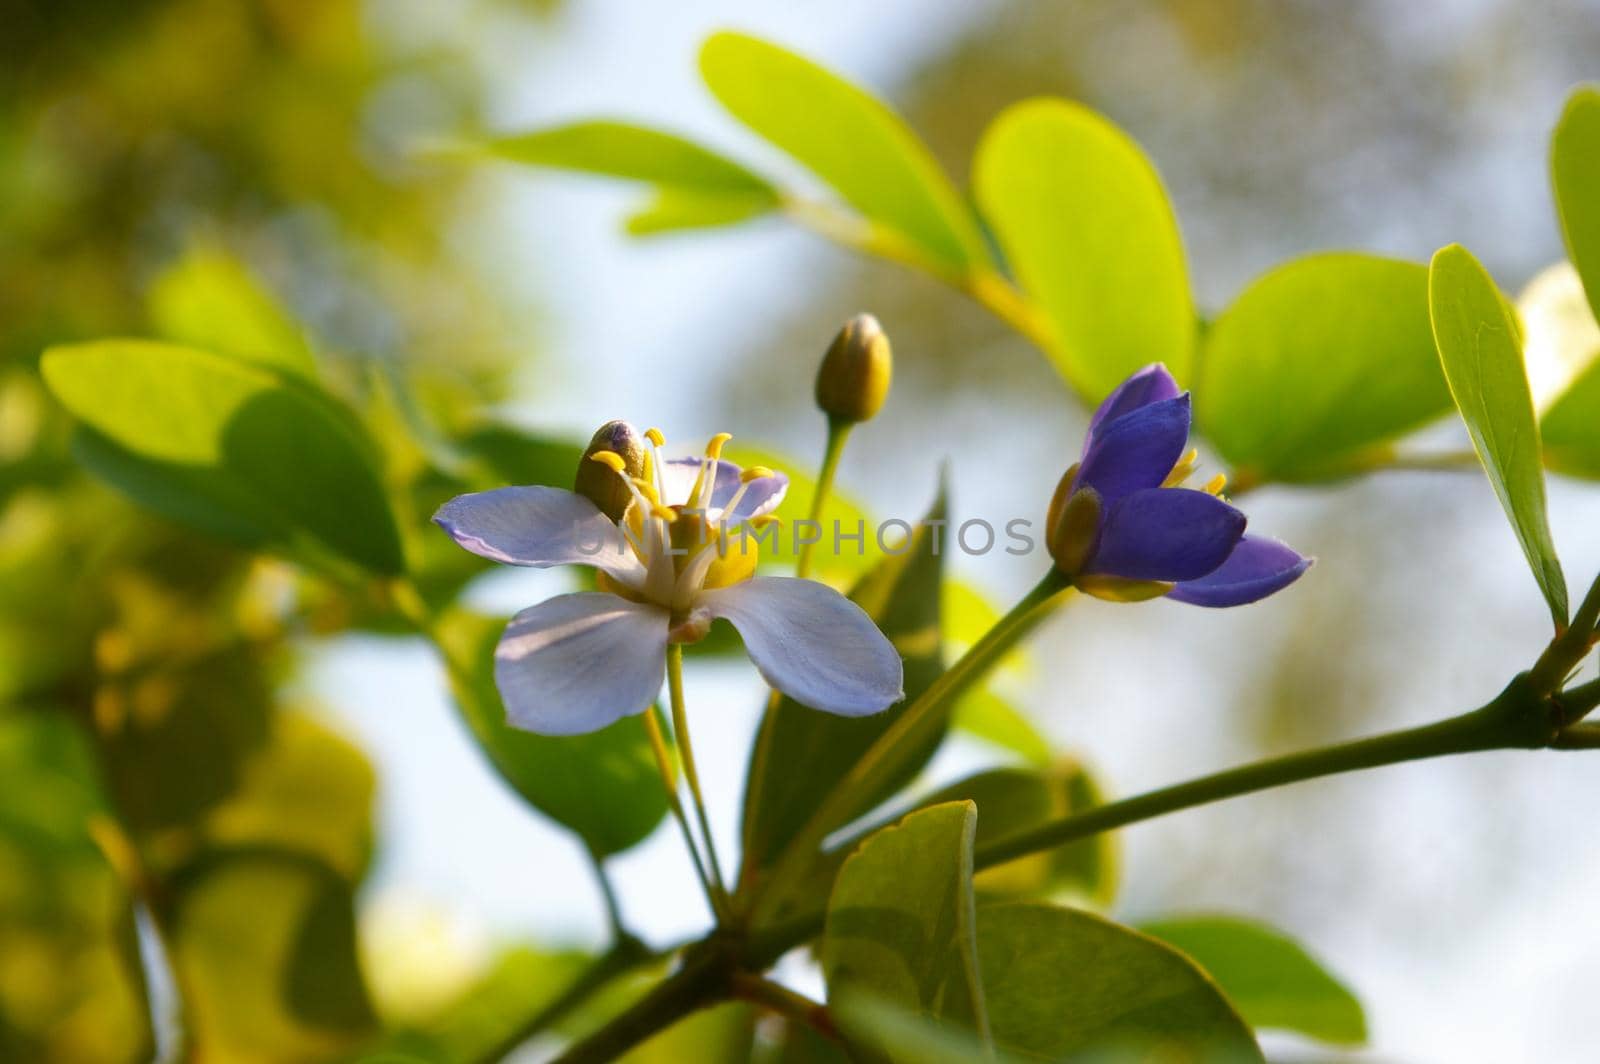 Small purple flowers and shiny green leaves of genus Guaiacum tree of Lignum vitae wood